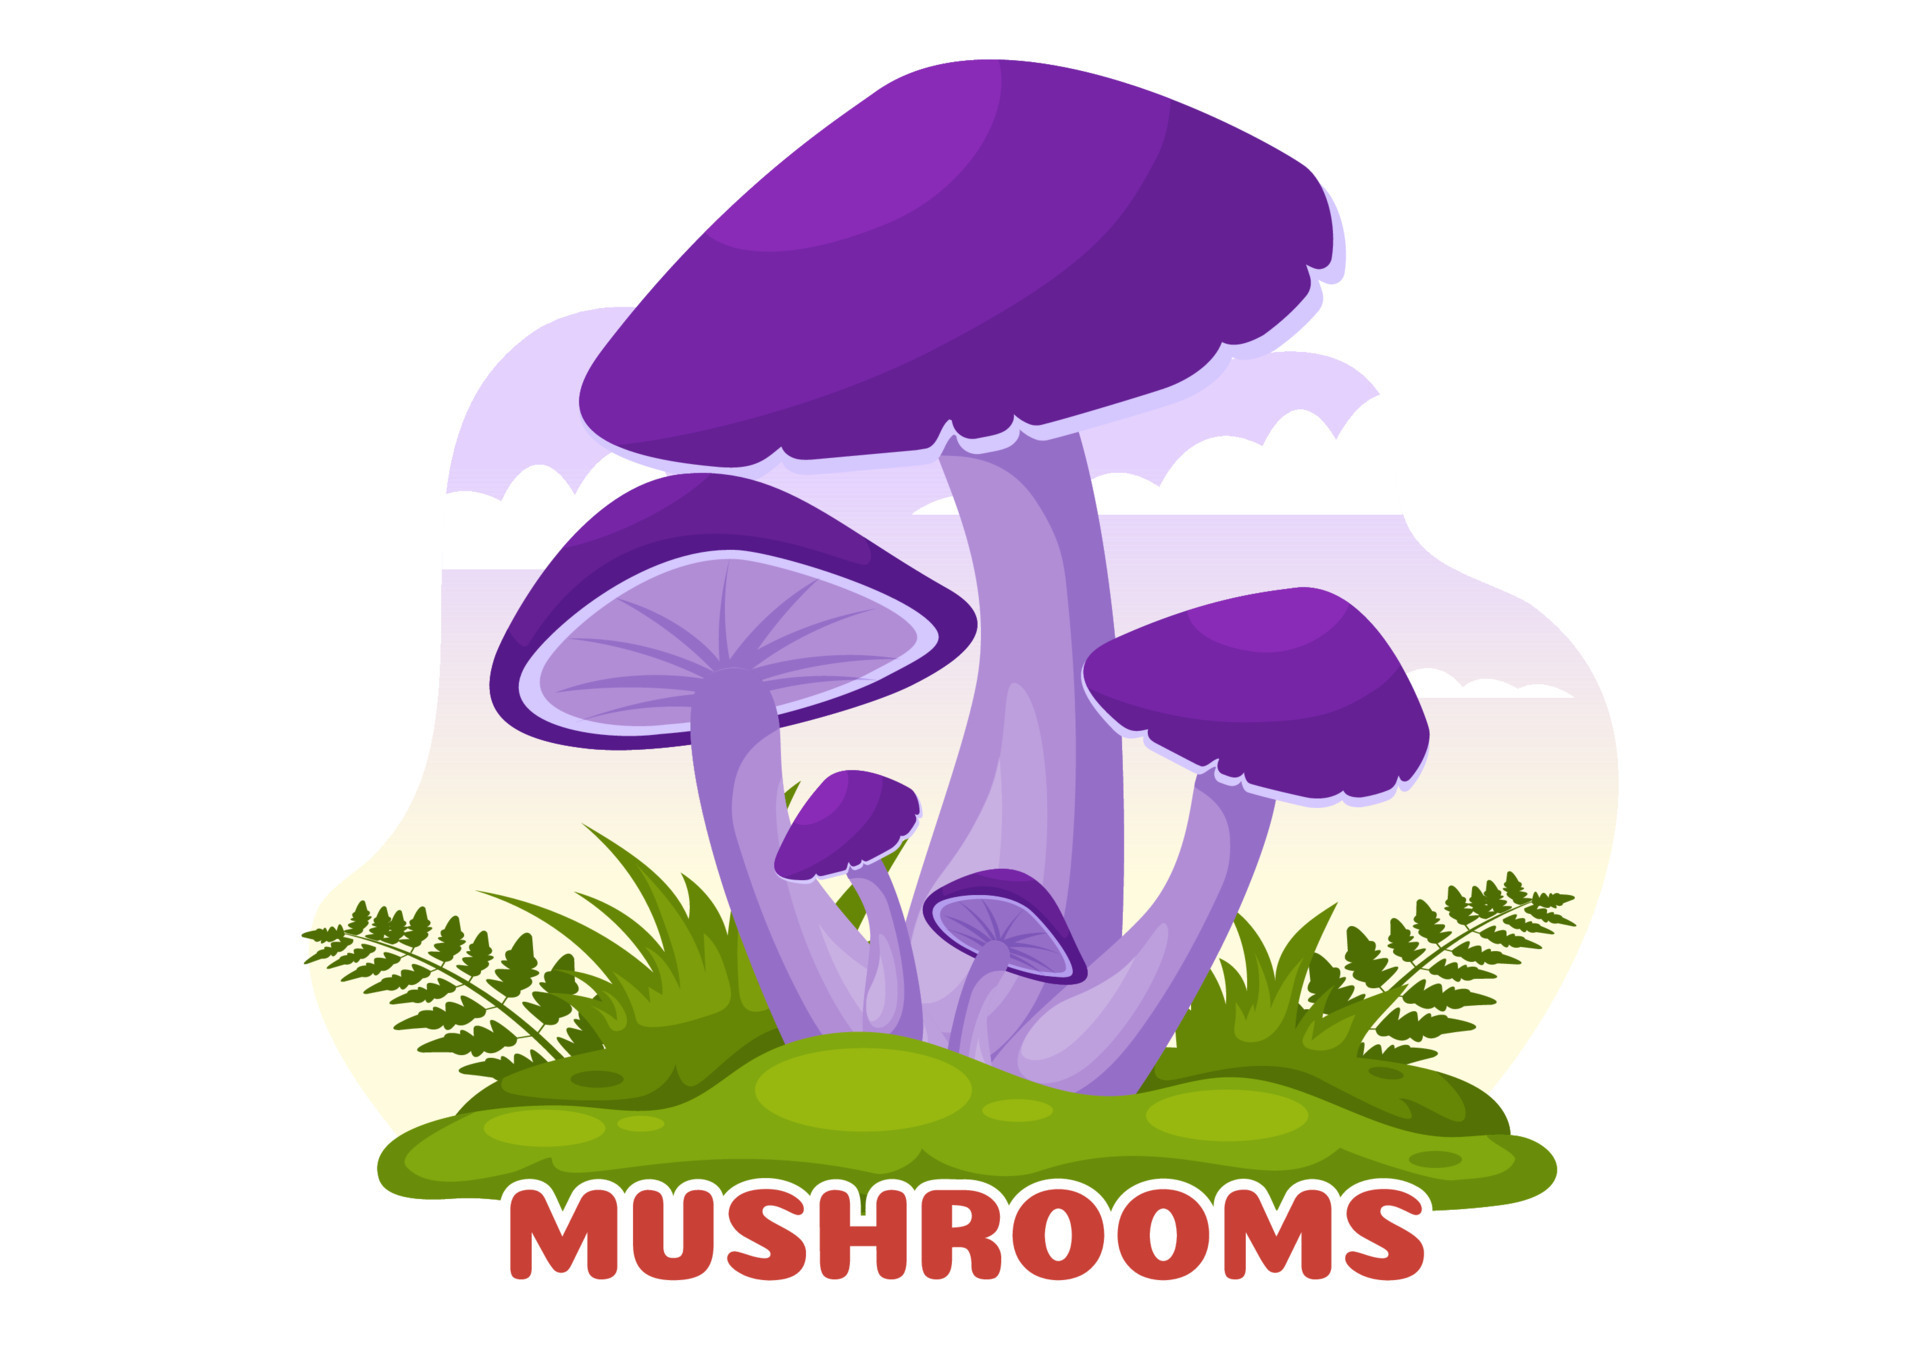 Mushrooms grass seeds terraria фото 96